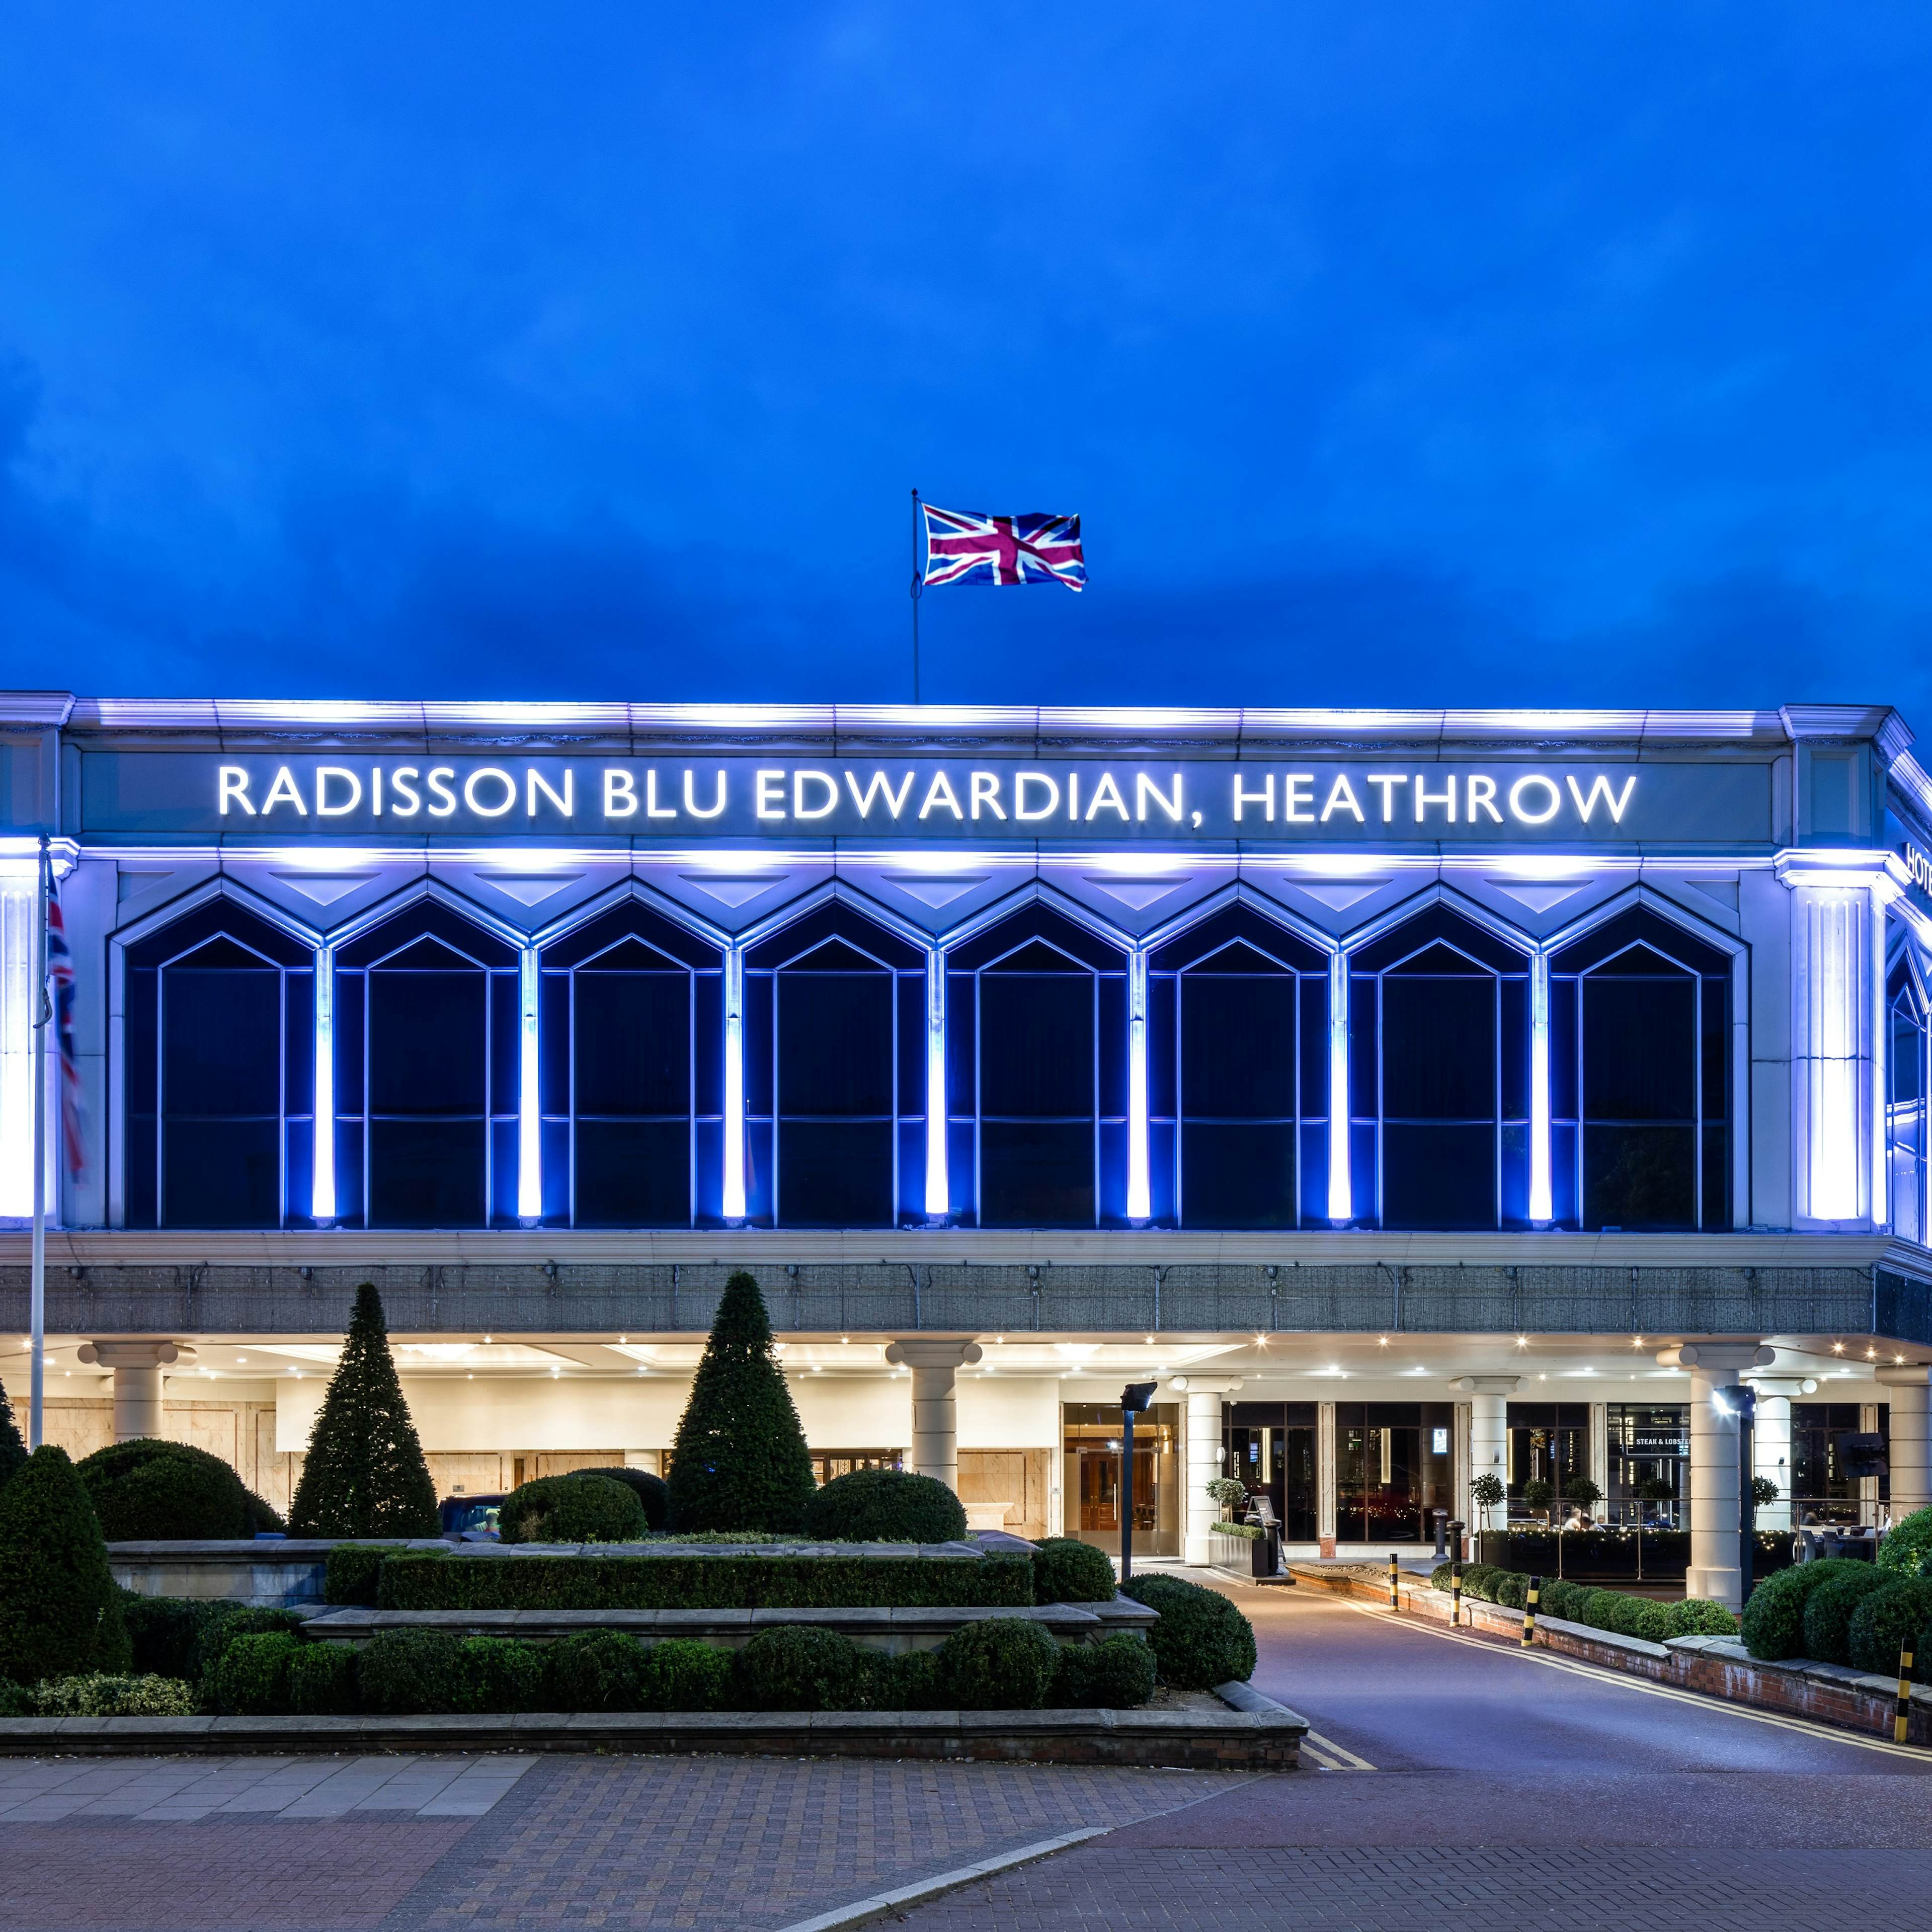 Radisson Blu Edwardian Heathrow - Commonwealth East Suite image 2